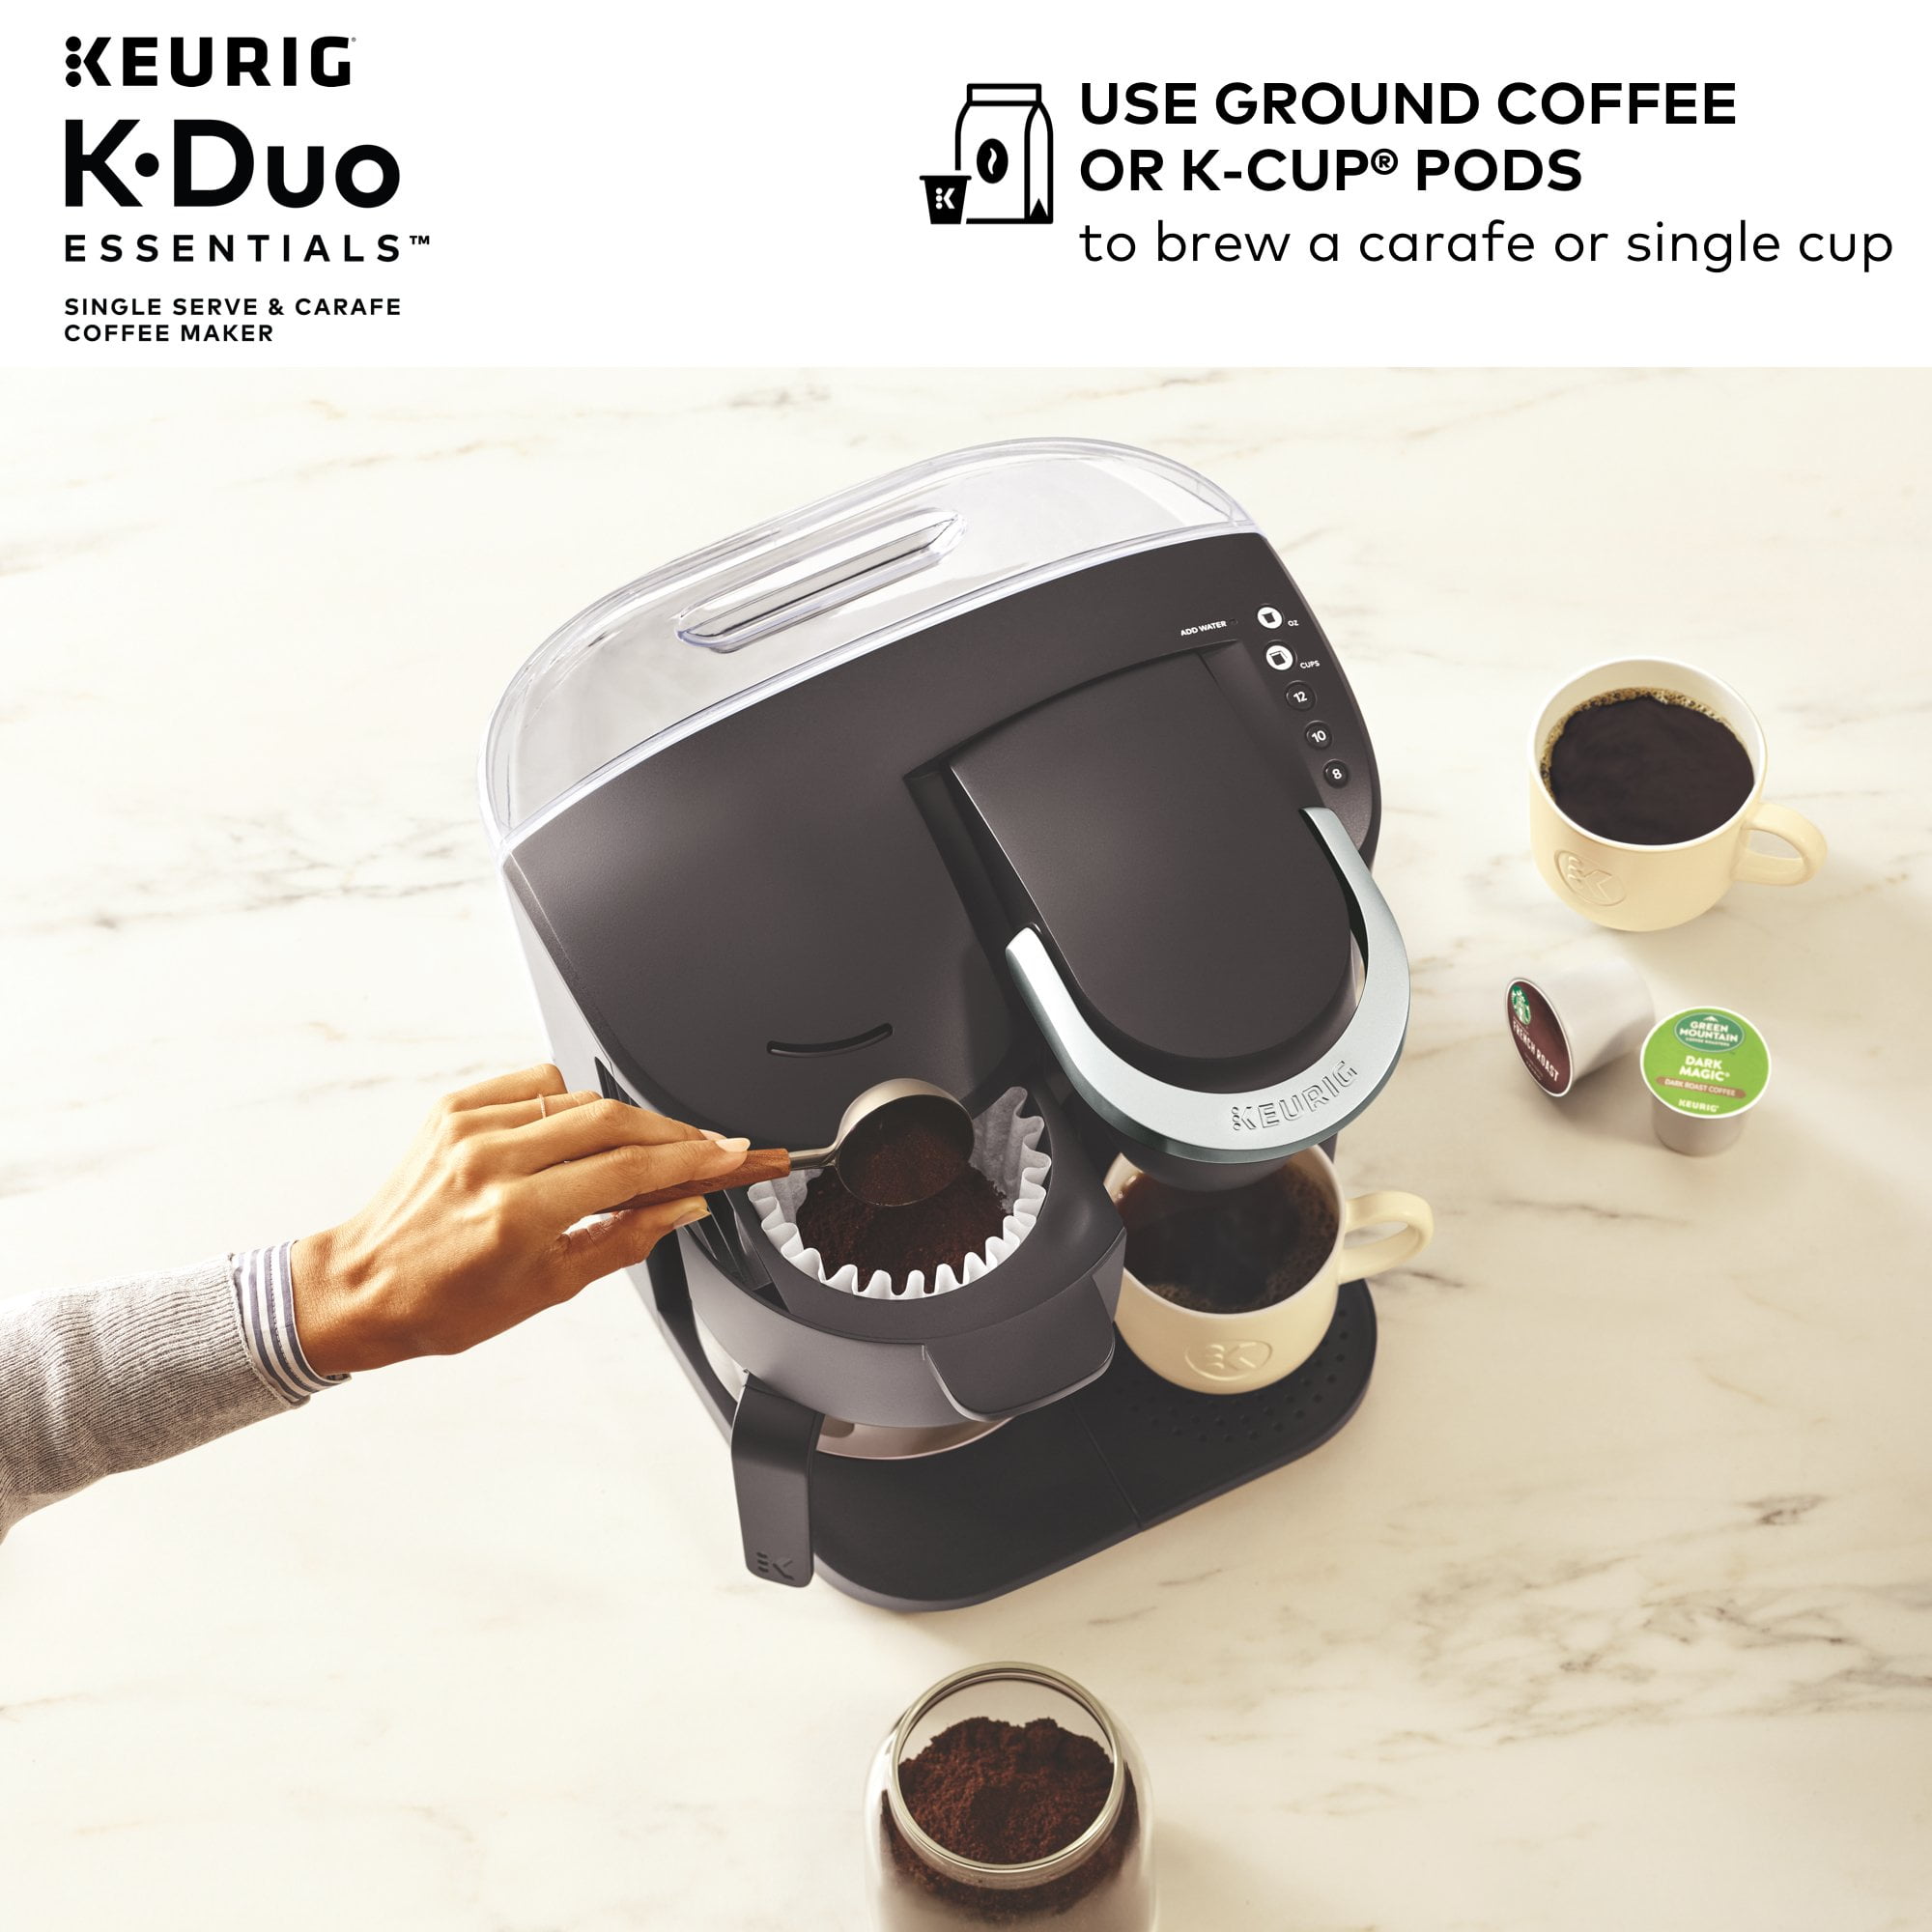 Keurig® K-Duo™ Single Serve & Carafe Coffee Maker - Black, 1 ct